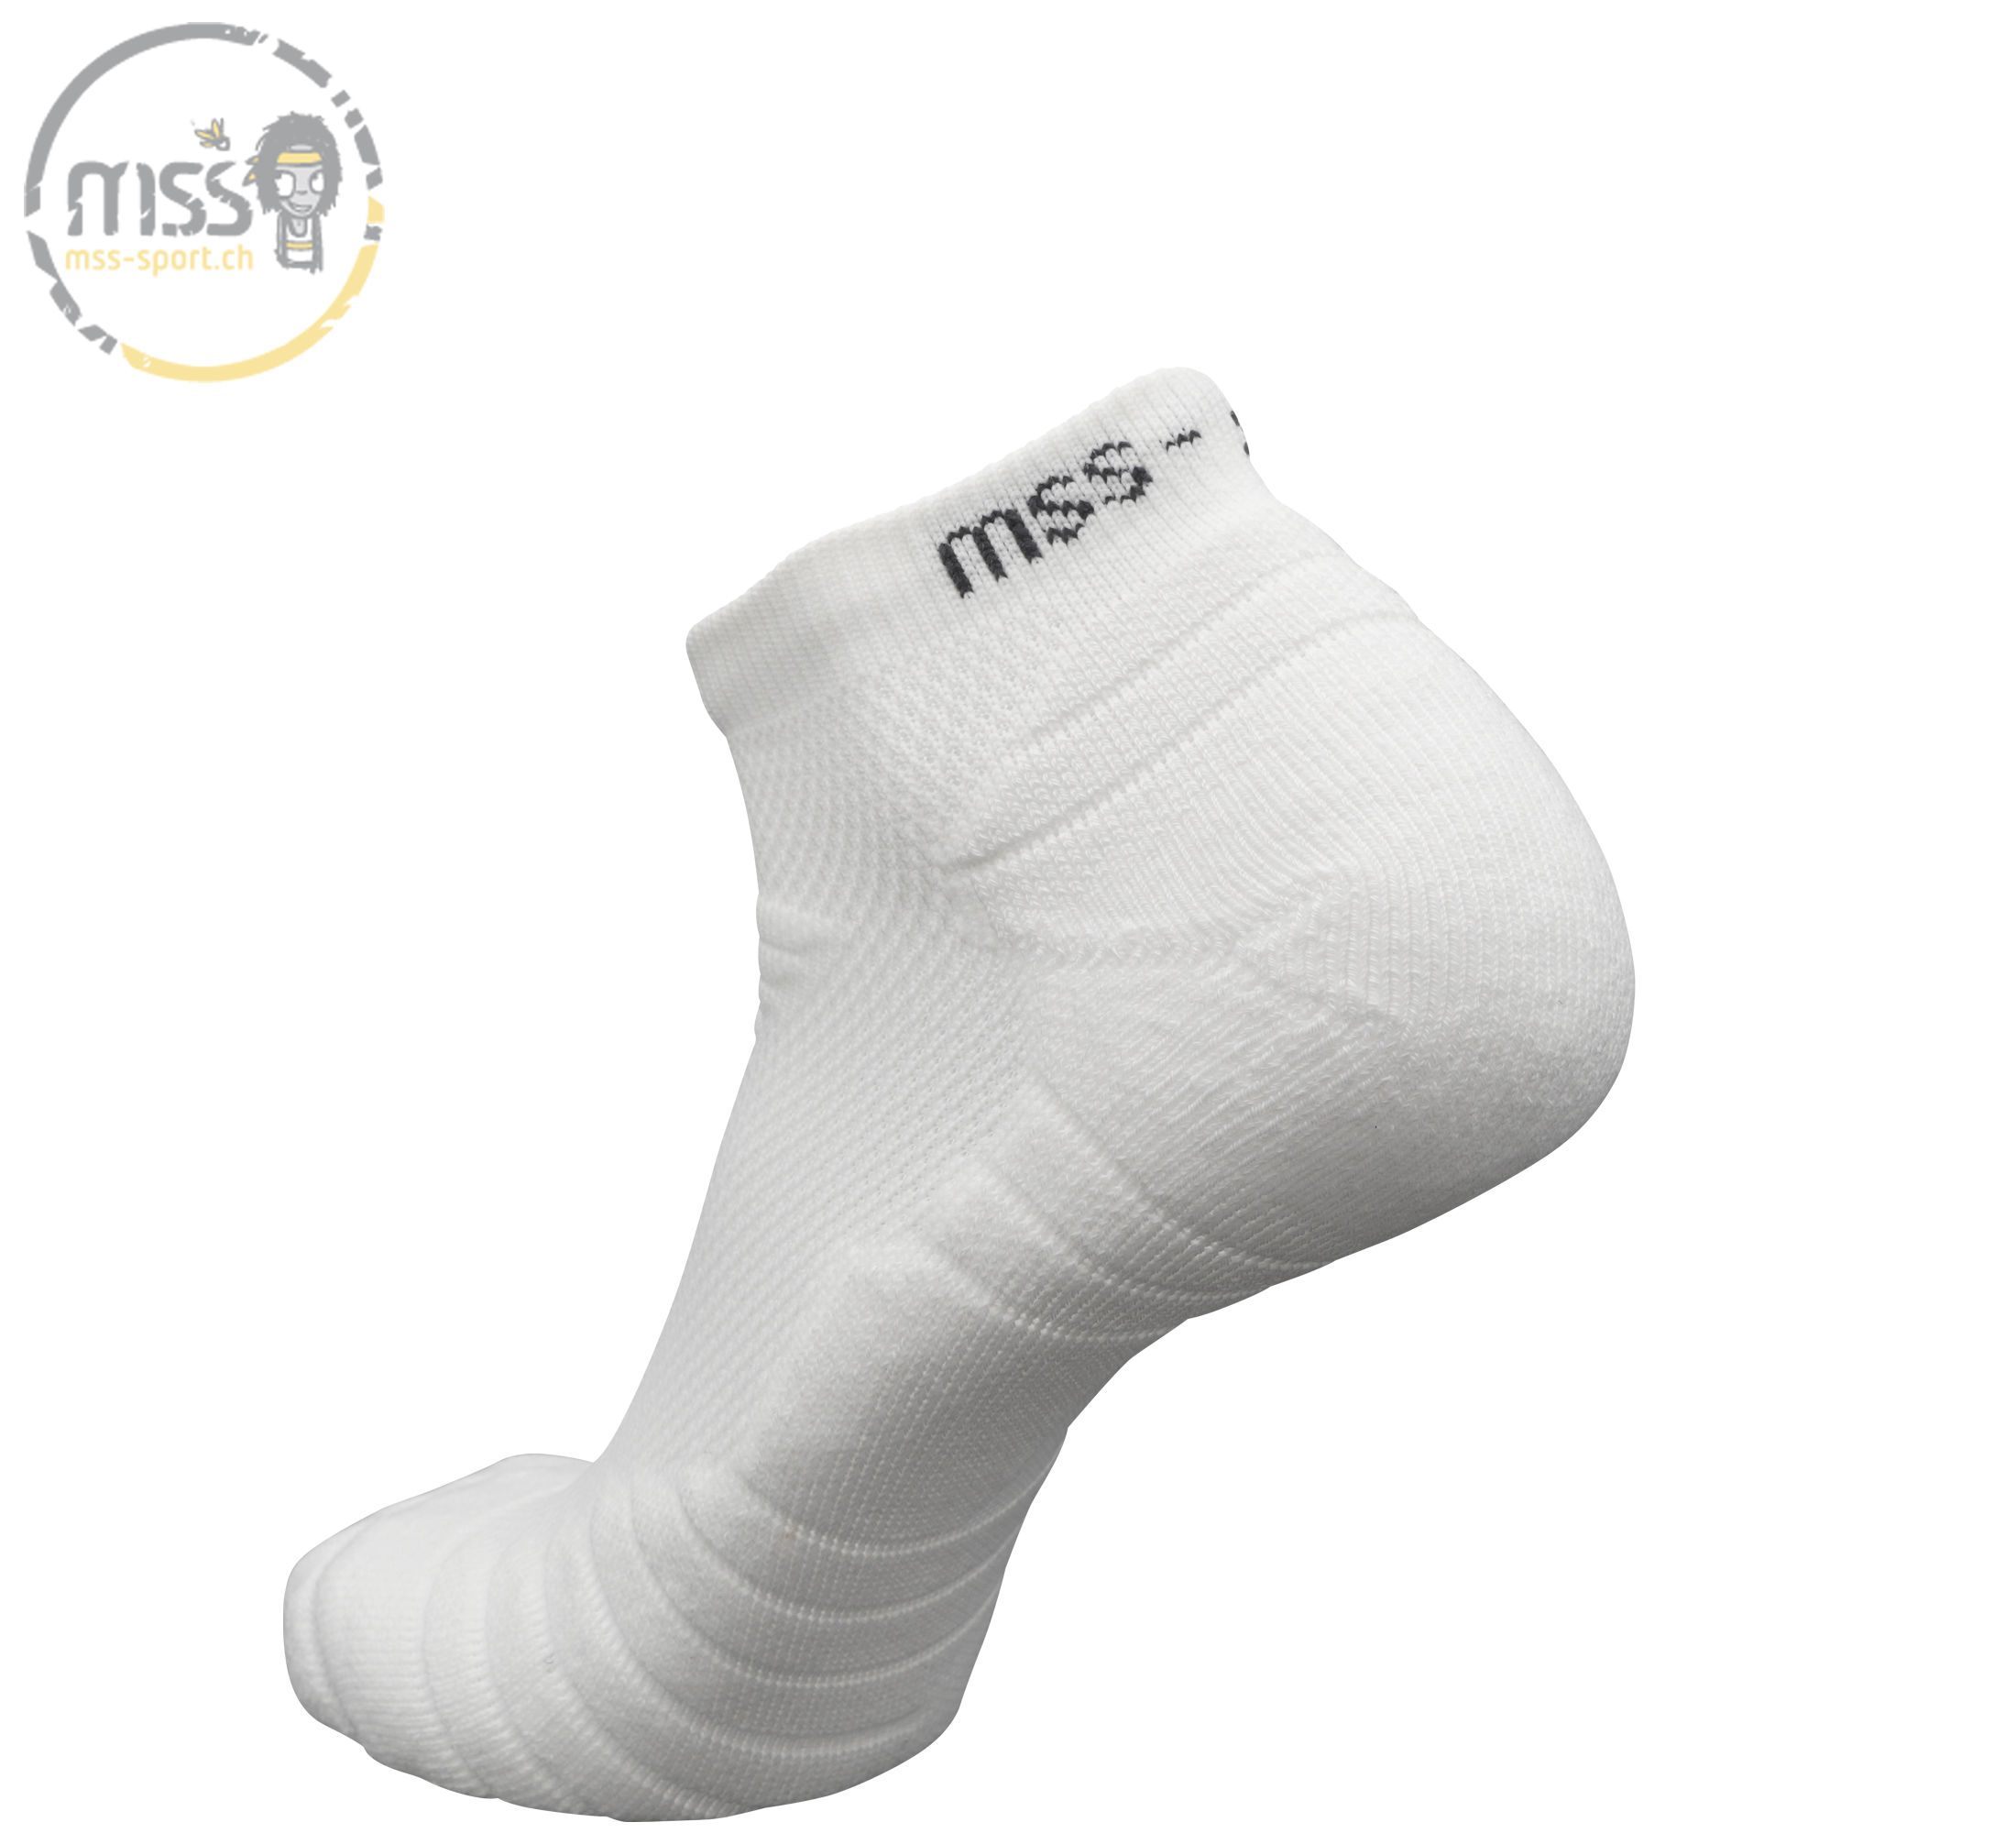 mss-socks Smash 5300 low Men white